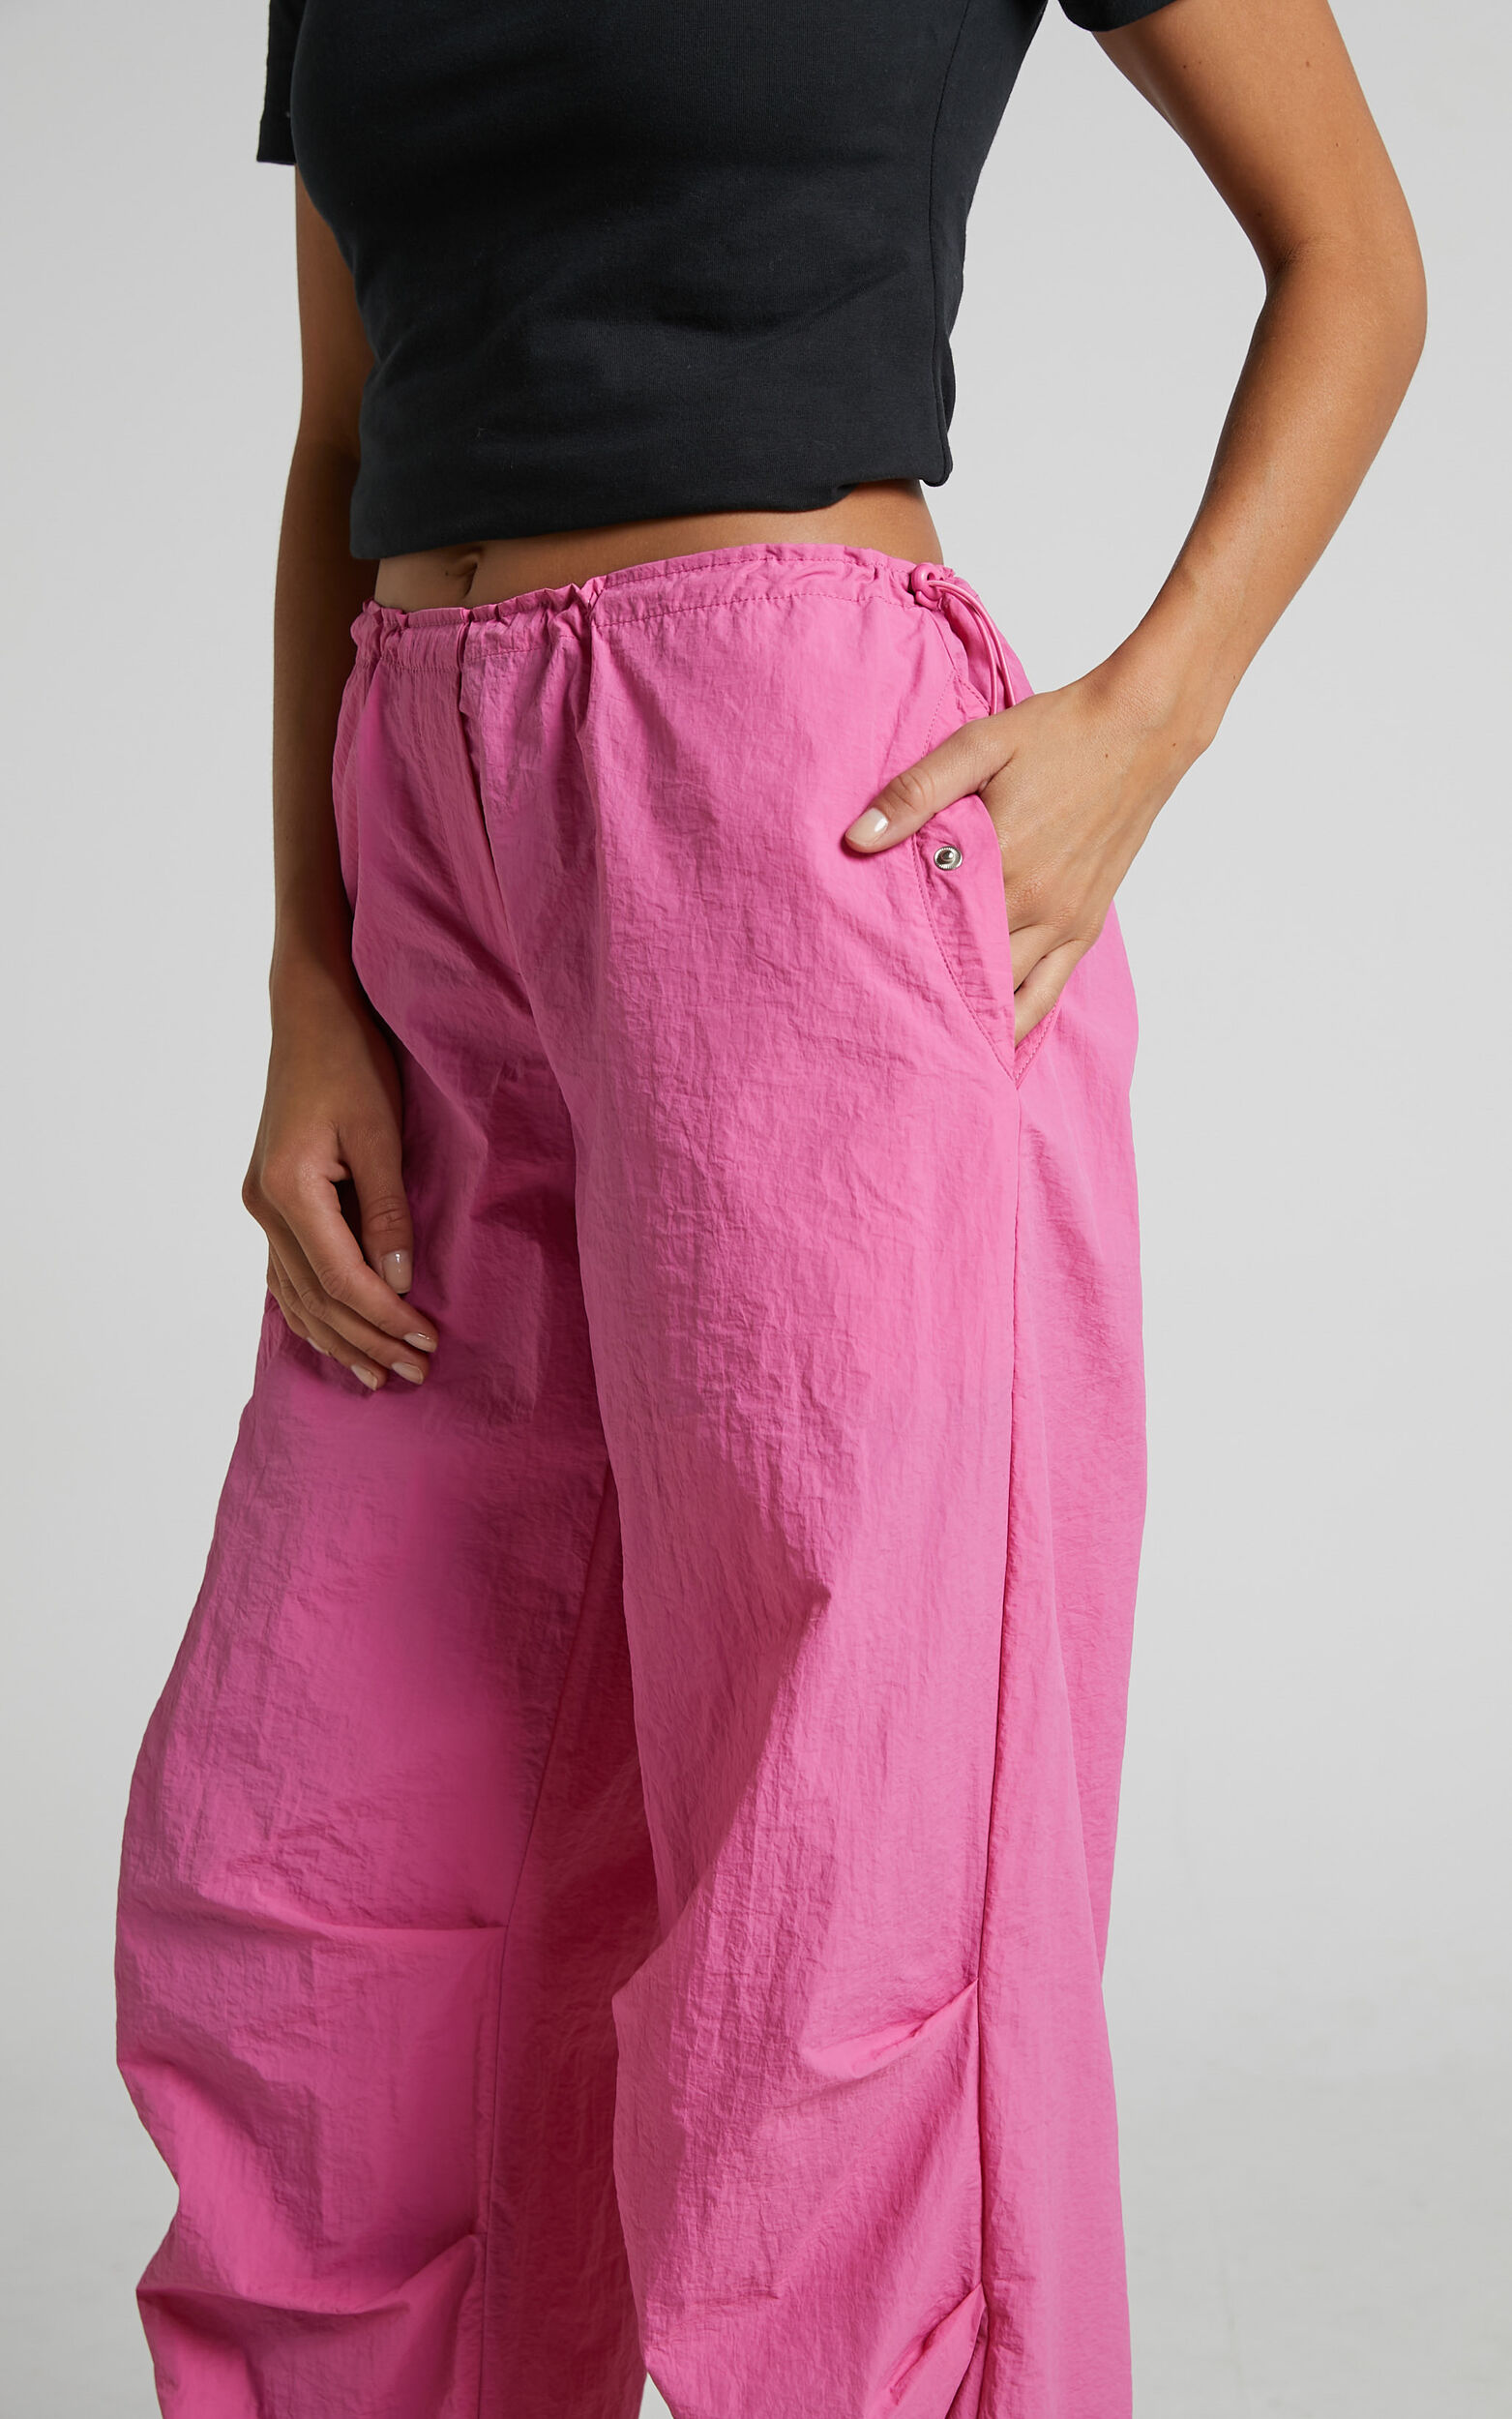 Utility Pants - Low Rise Parachute Pants in Candy Pink | Showpo